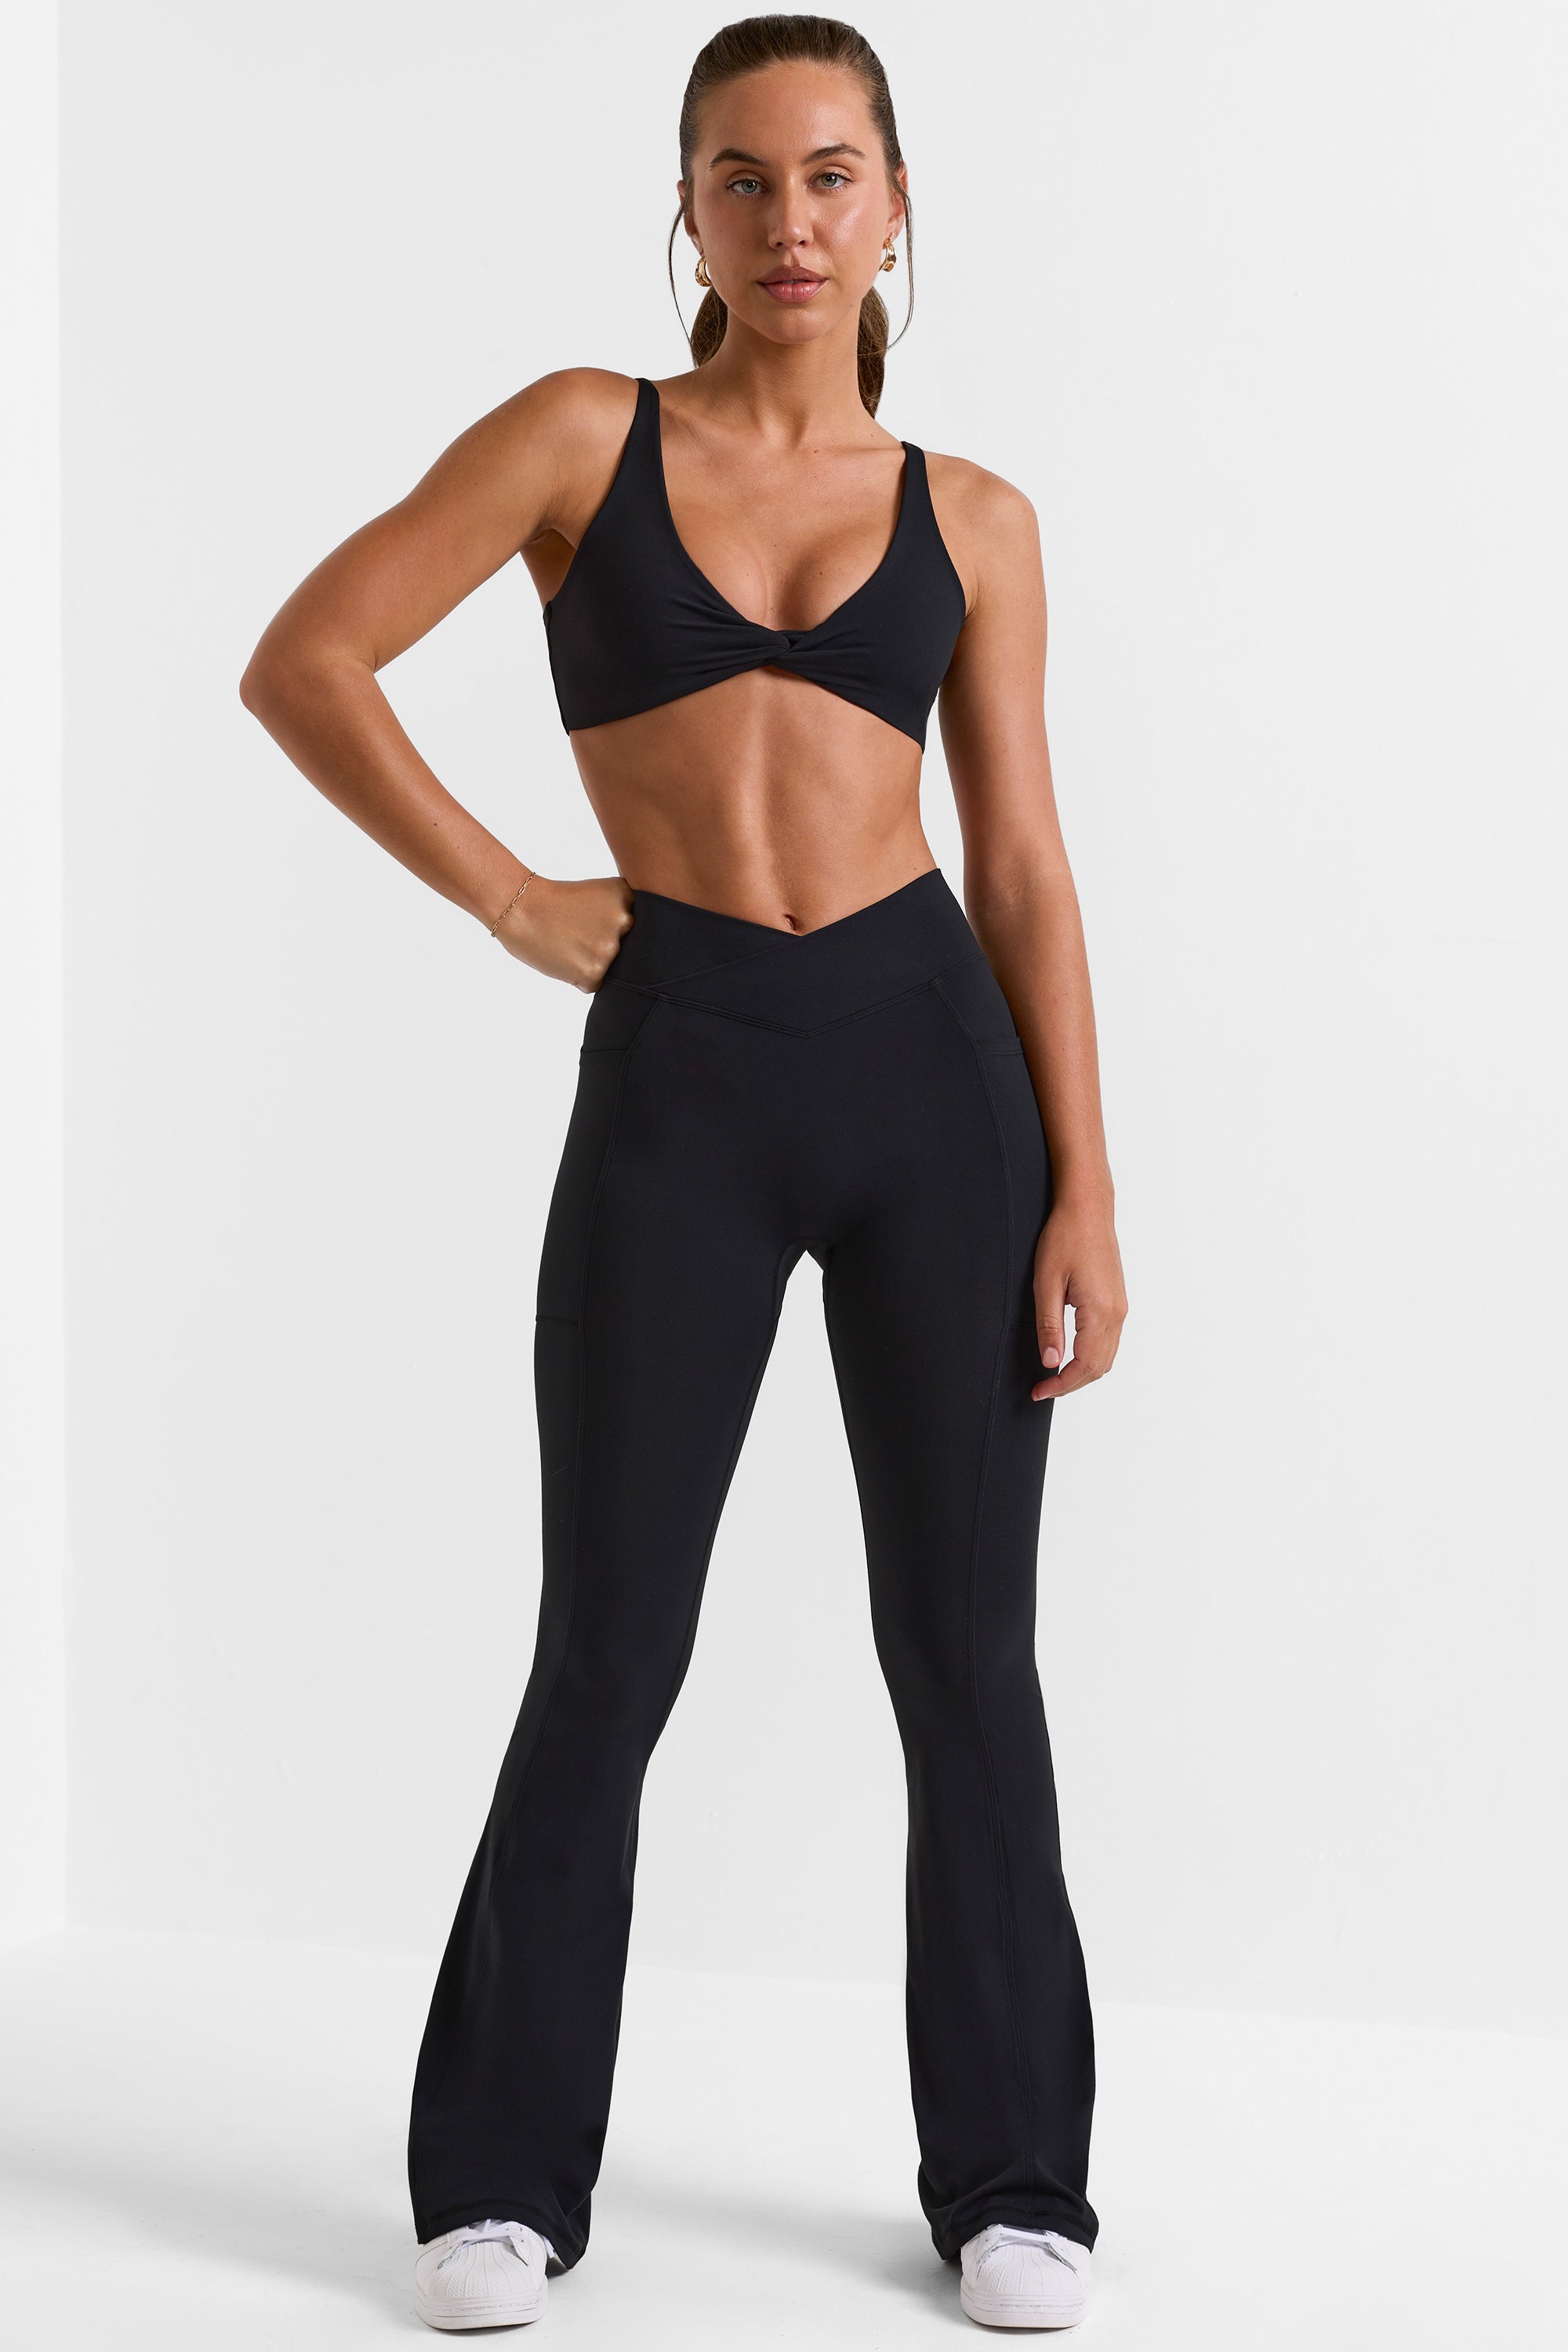 Solid Color Gym Yoga Set Tight Leggings Sports Fitness Cross Bra Top 2pcs  Soft Sport Suit Comprehensive Training Women Sportwear